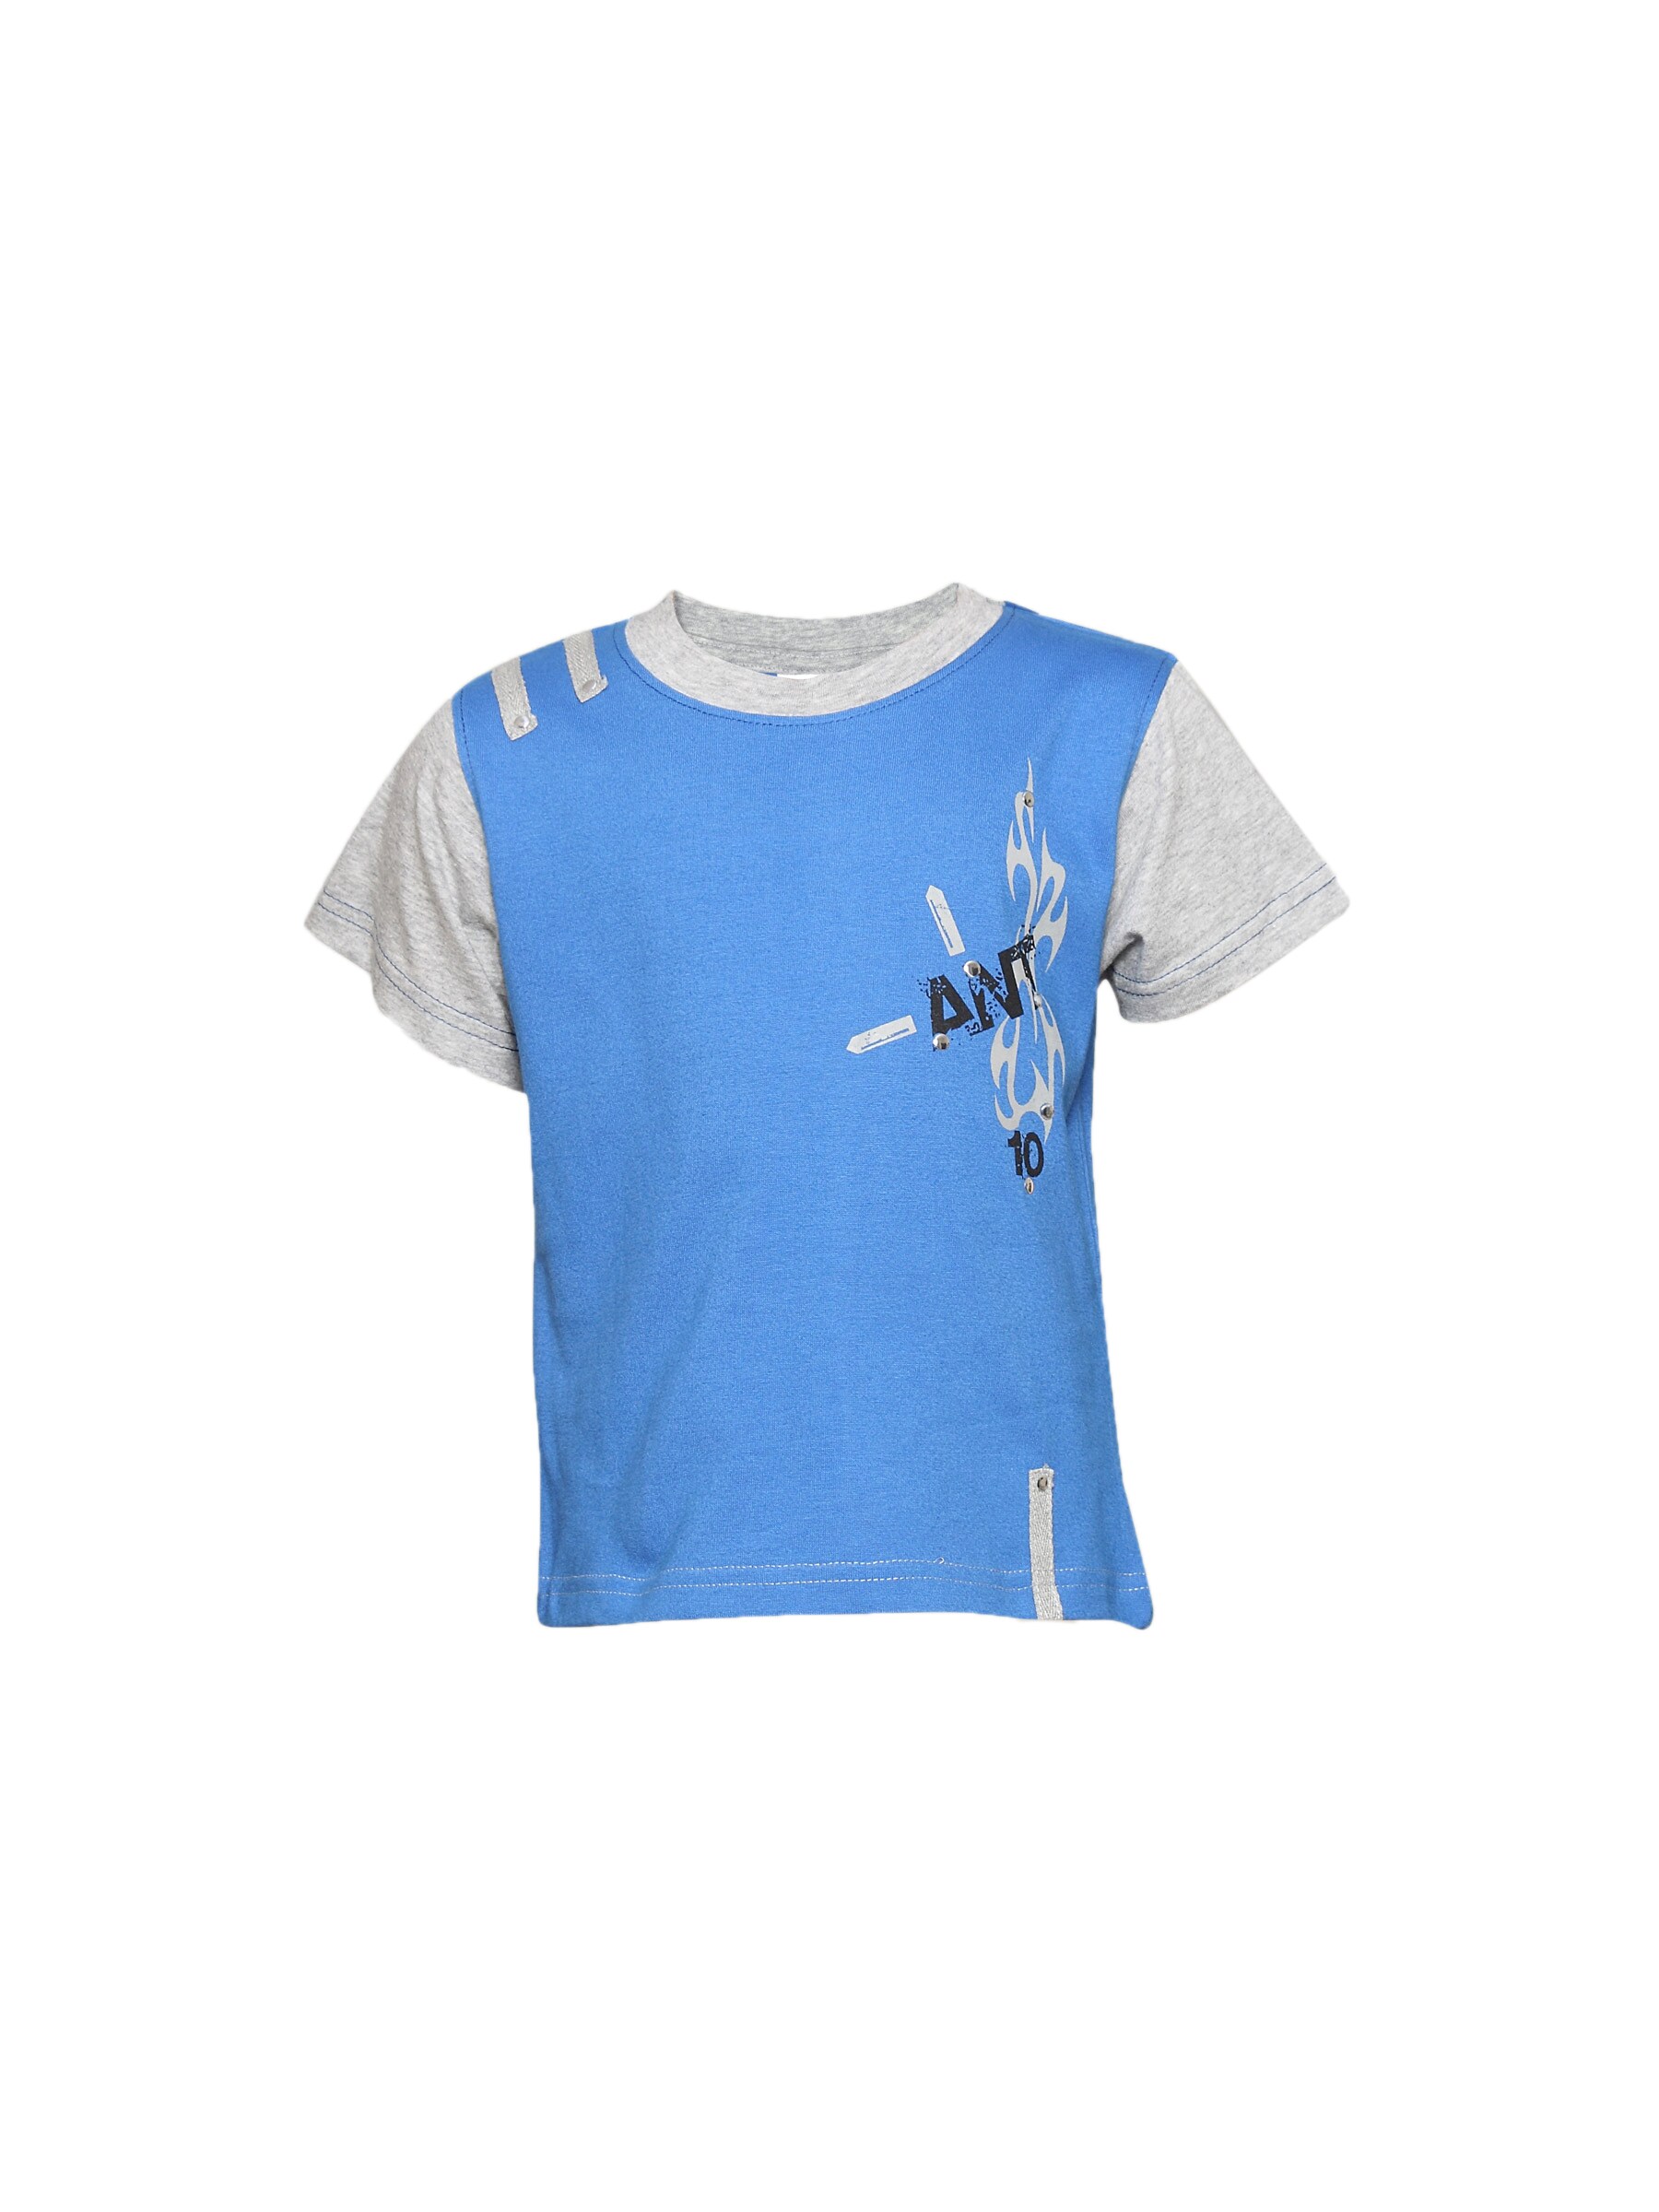 Ant Kids Boy's Grey Blue Kidswear